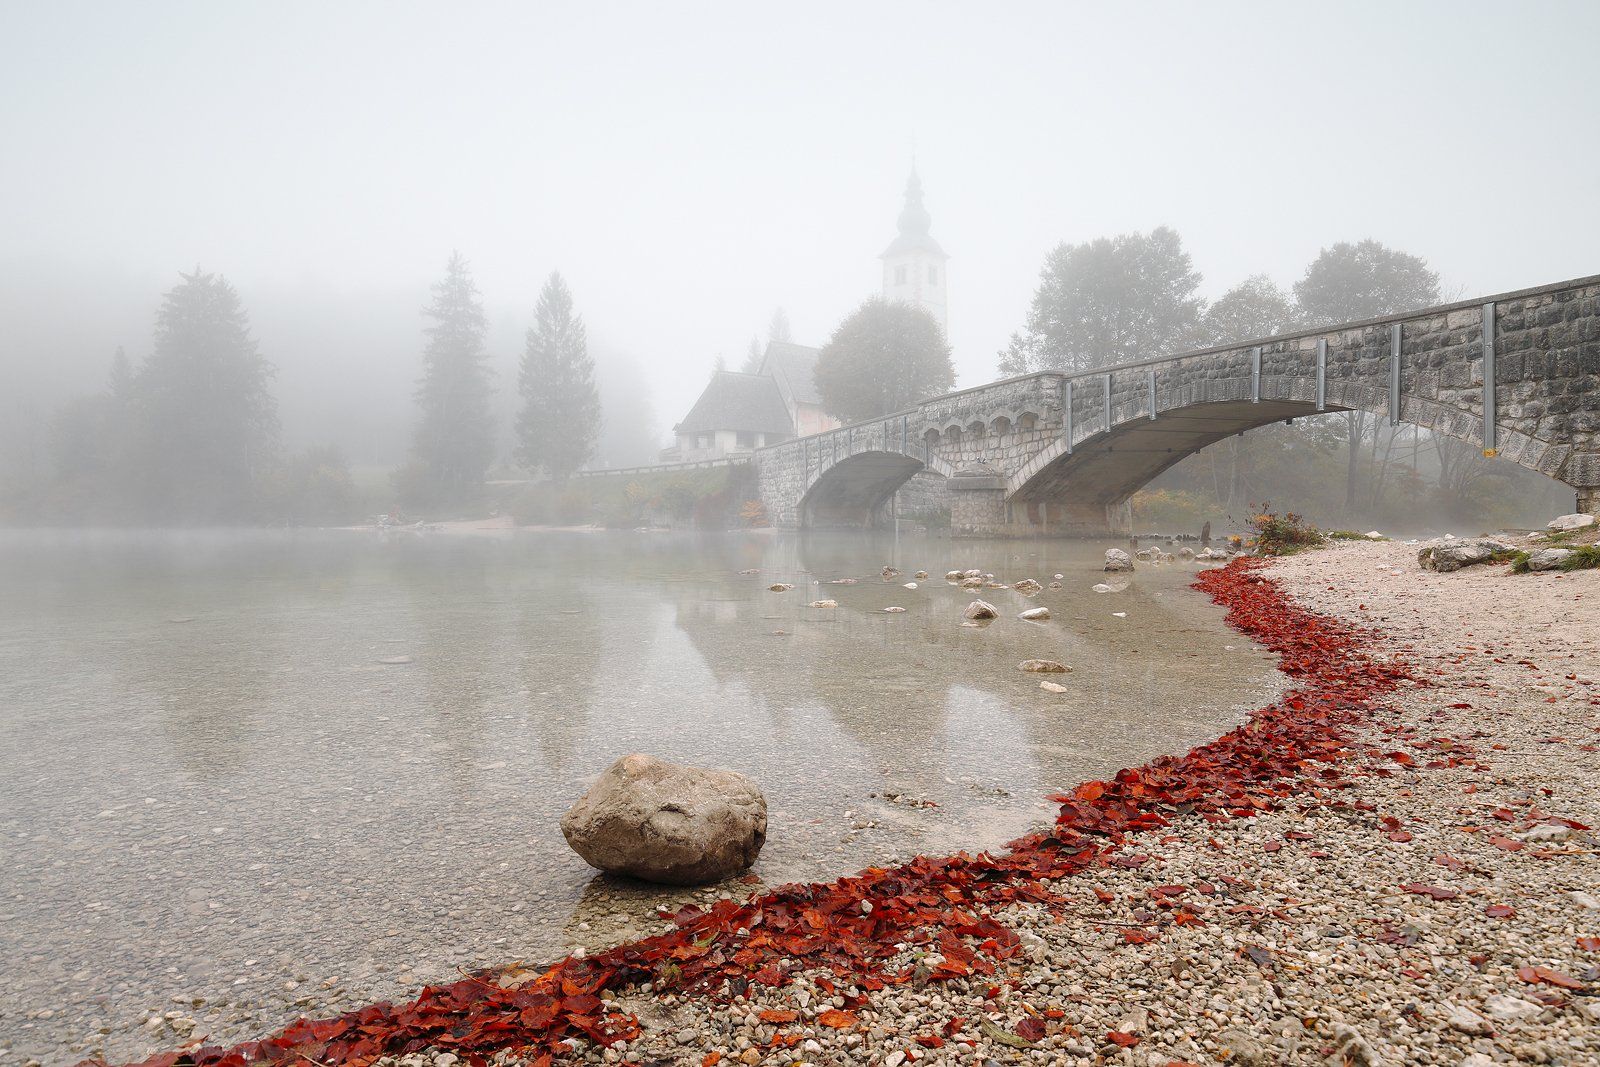 bohinj, ribcev laz, slovenia, mist, fog, mood, morning, lake, bridge, church, stone, water, leaf, Jacek Lisiewicz